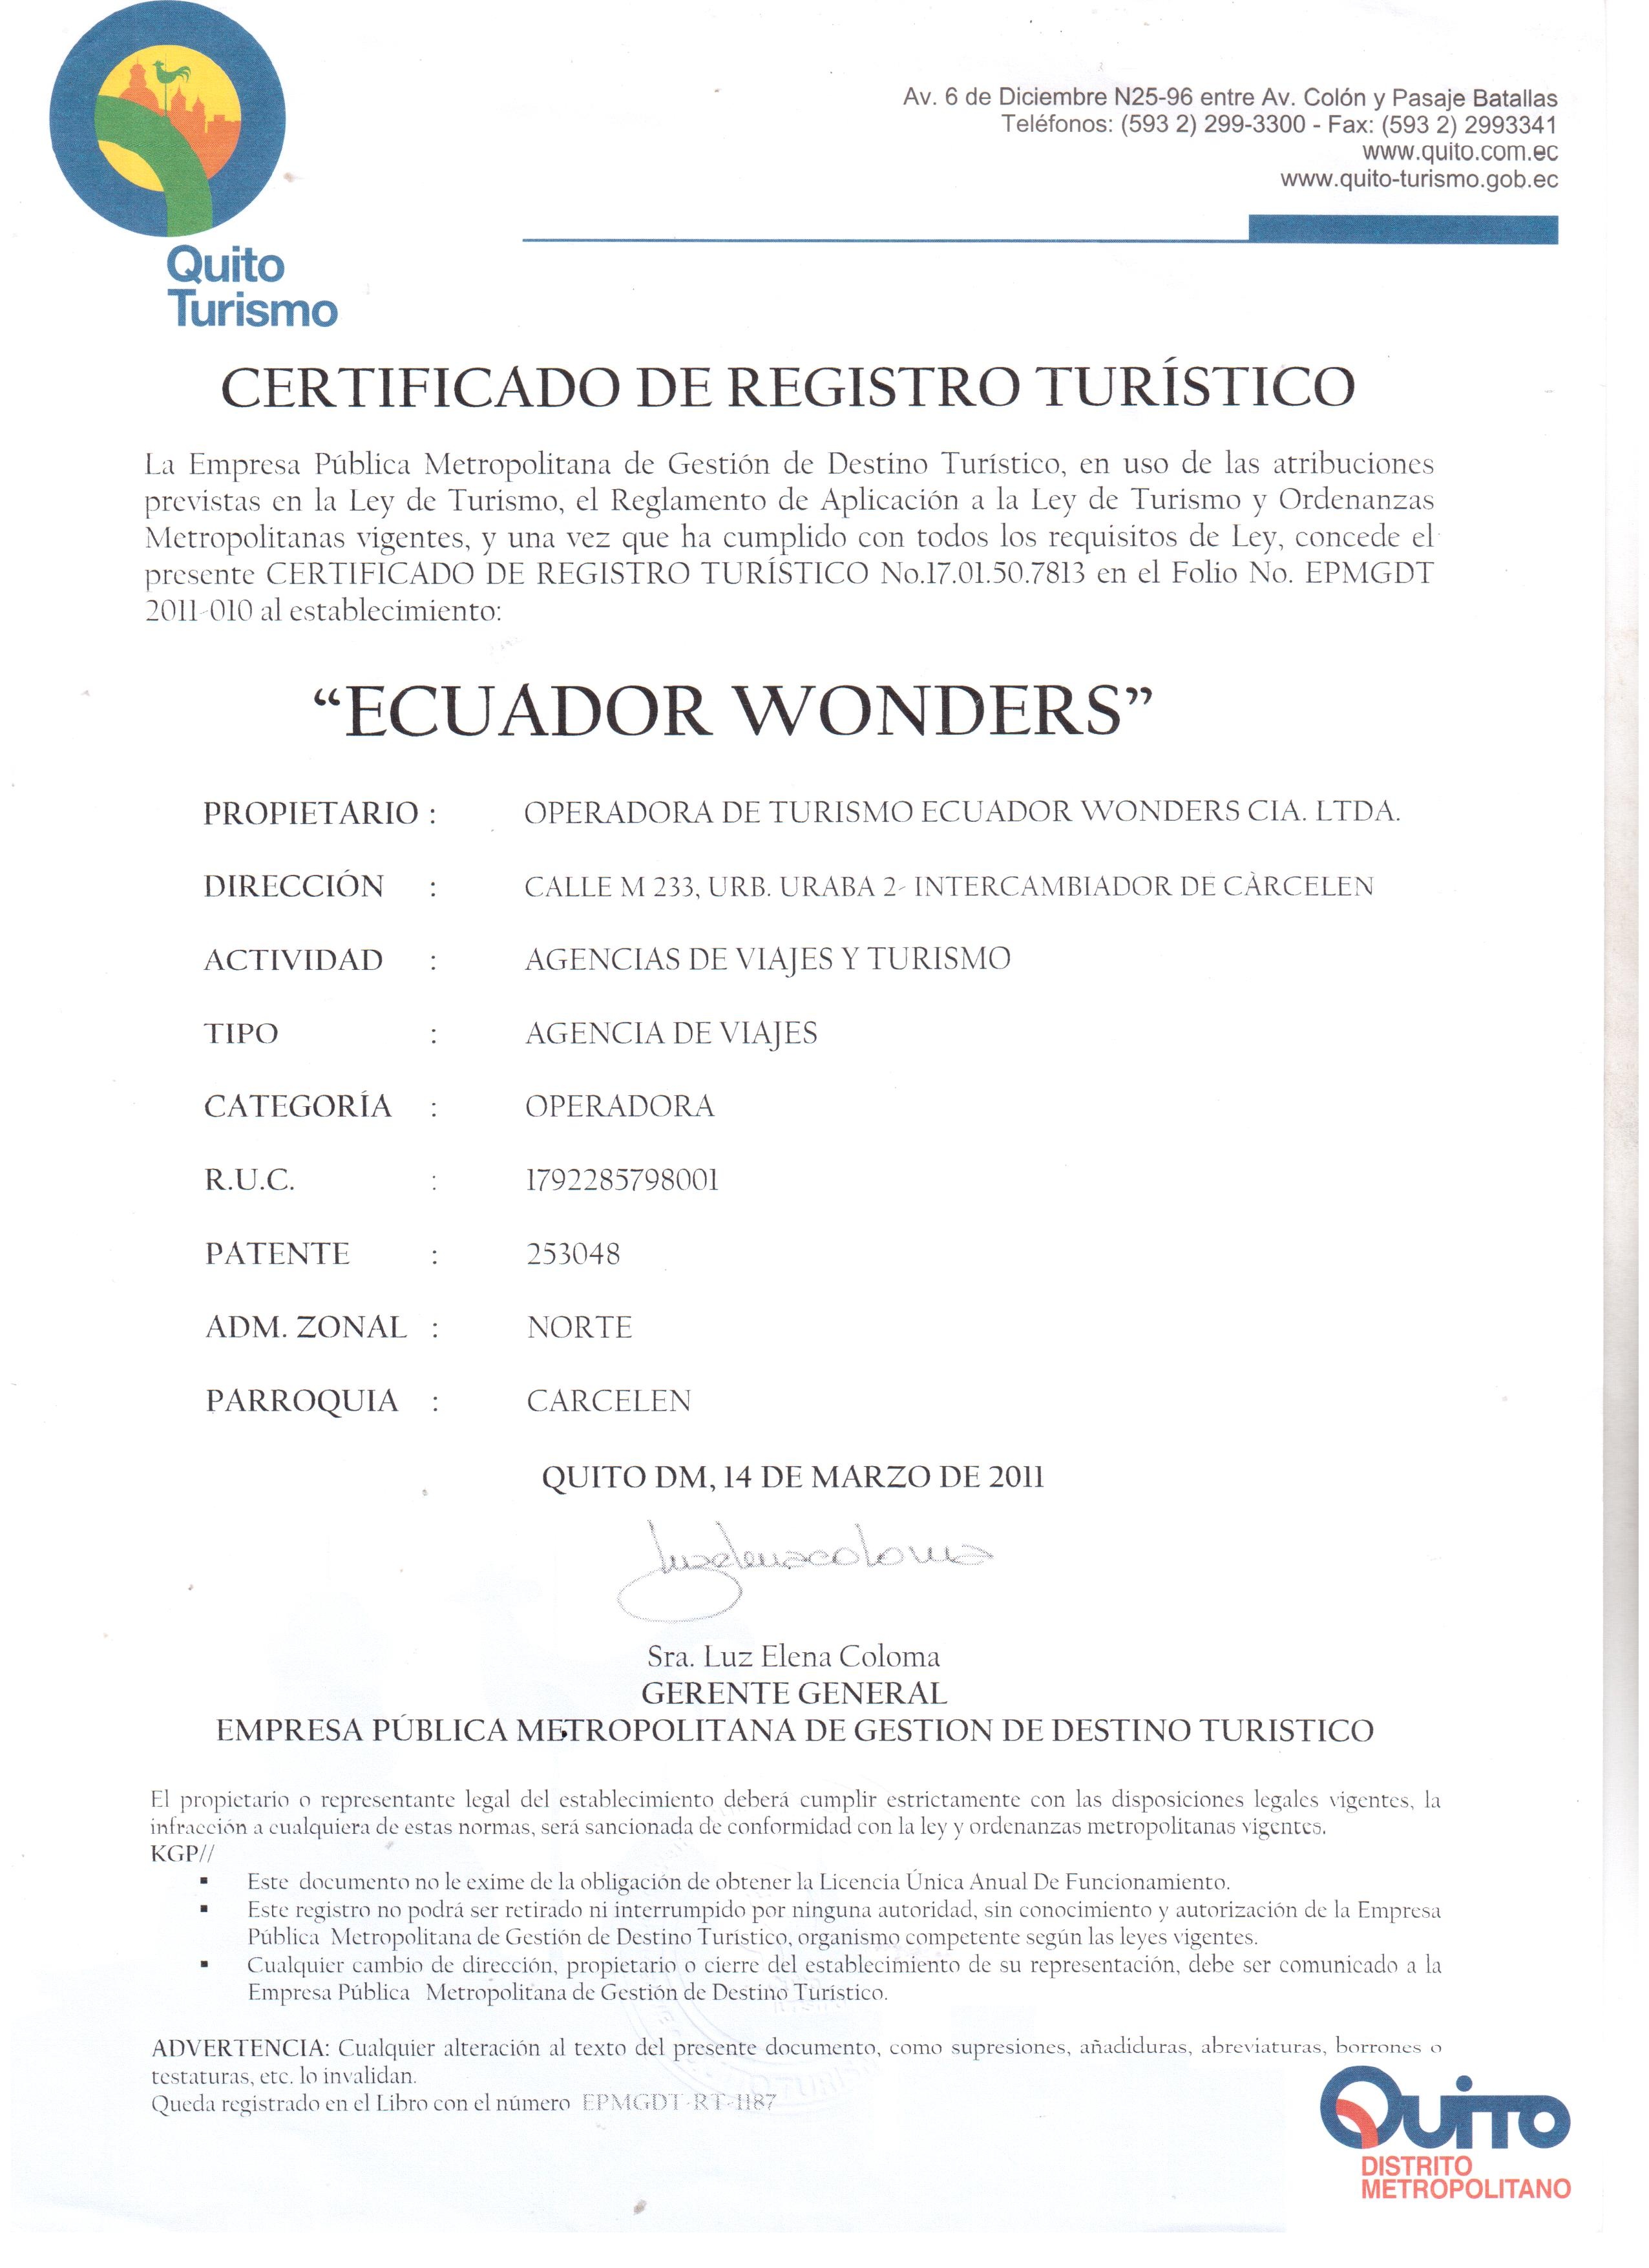 Tourist registration certificate